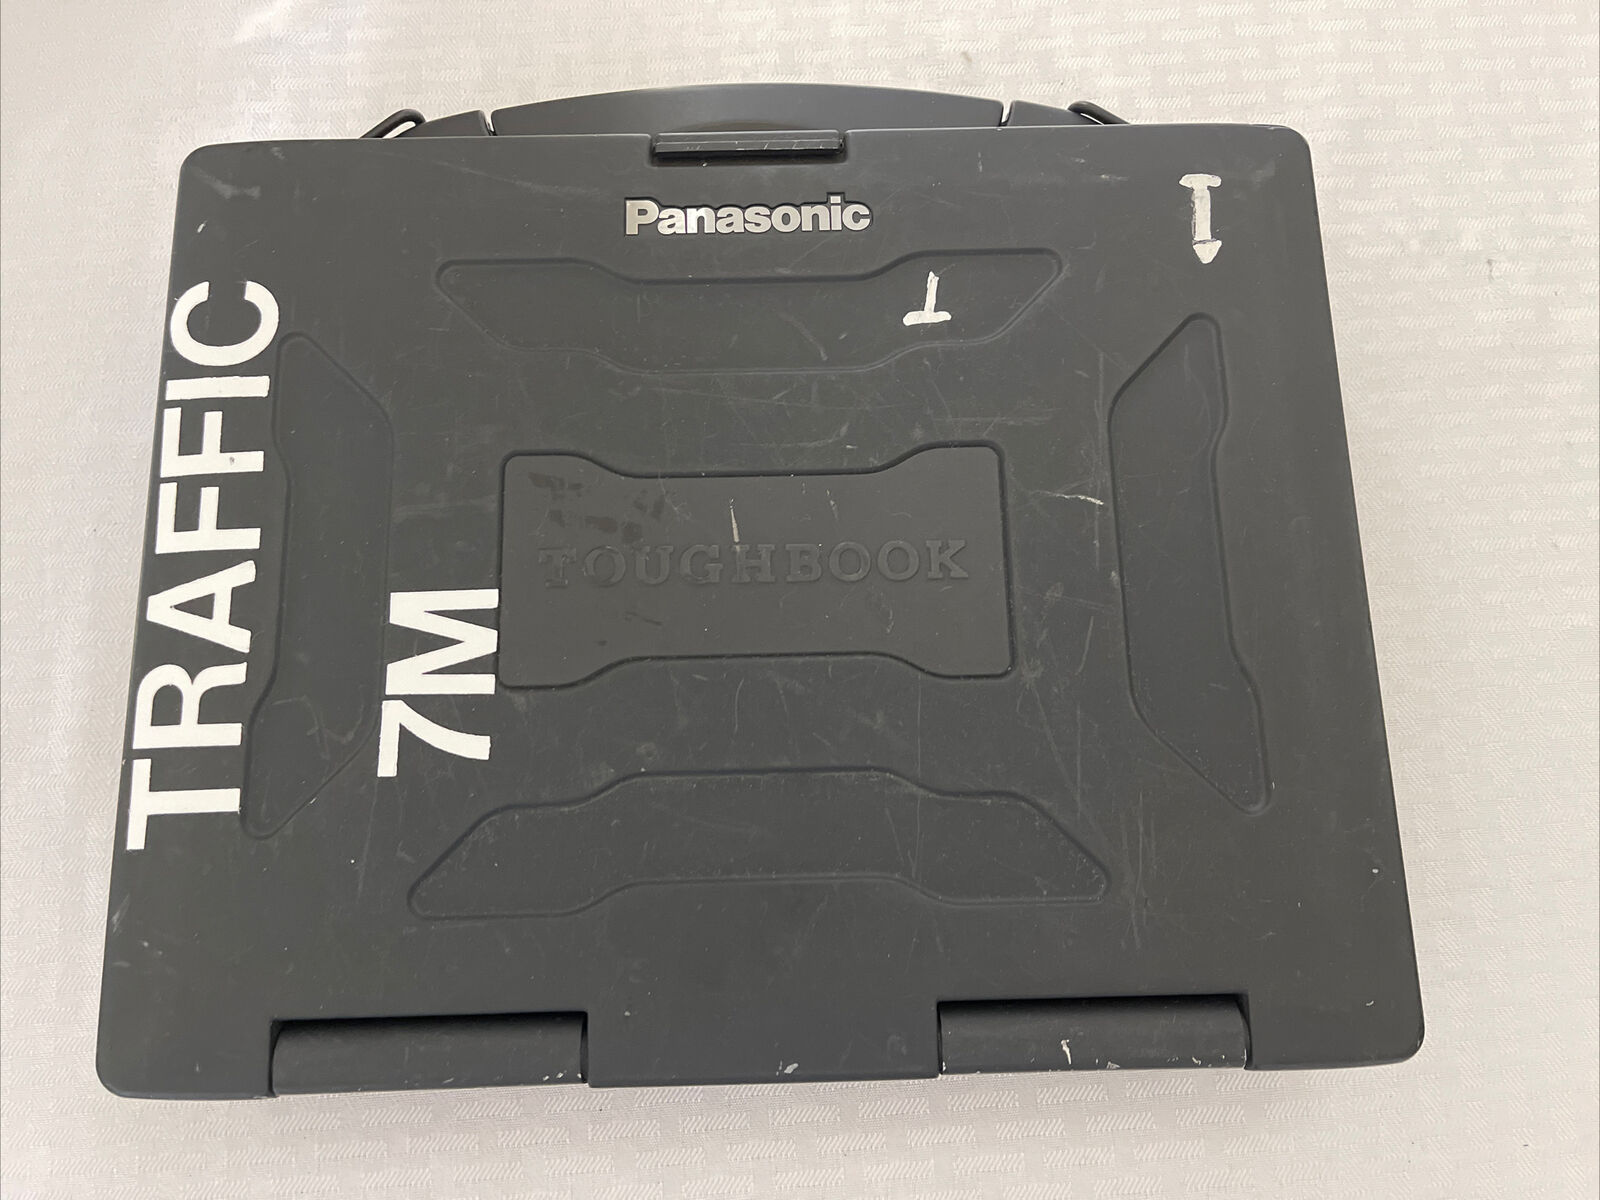 Panasonic Toughbook CF-27EA6GCAM|Intel Pentium II|No RAM|No HDD|Caddy Included